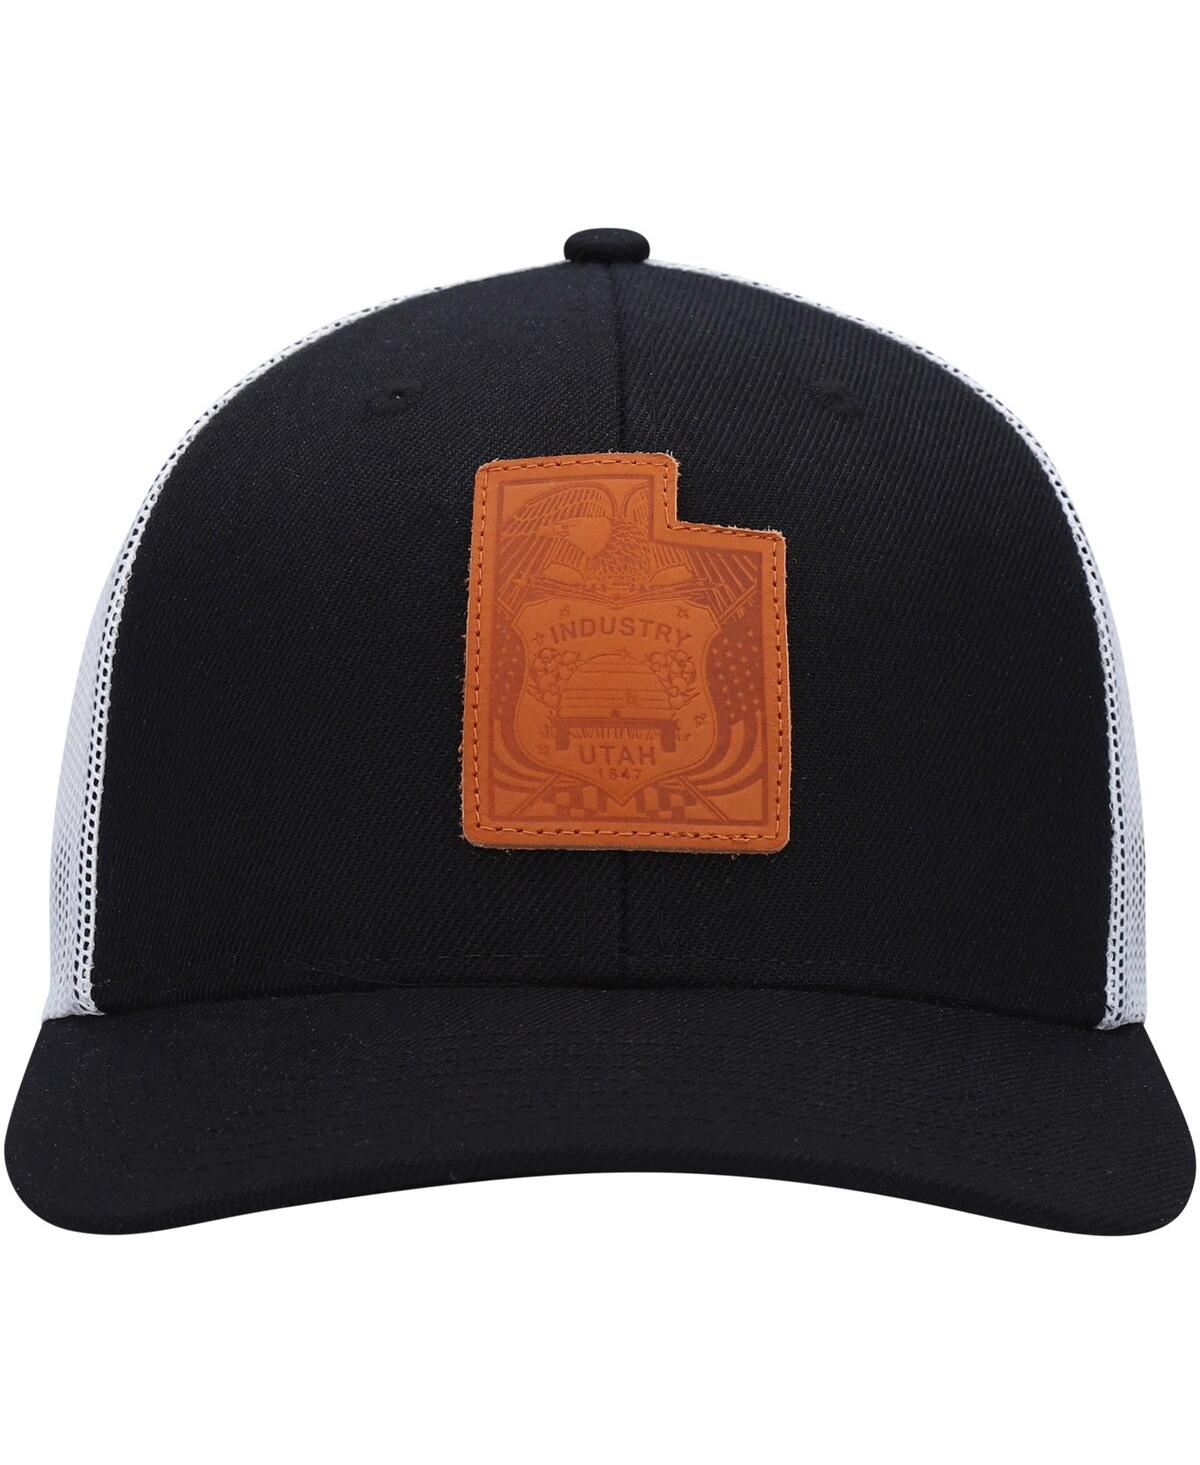 Shop Local Crowns Men's  Black Utah Leather State Applique Trucker Snapback Hat